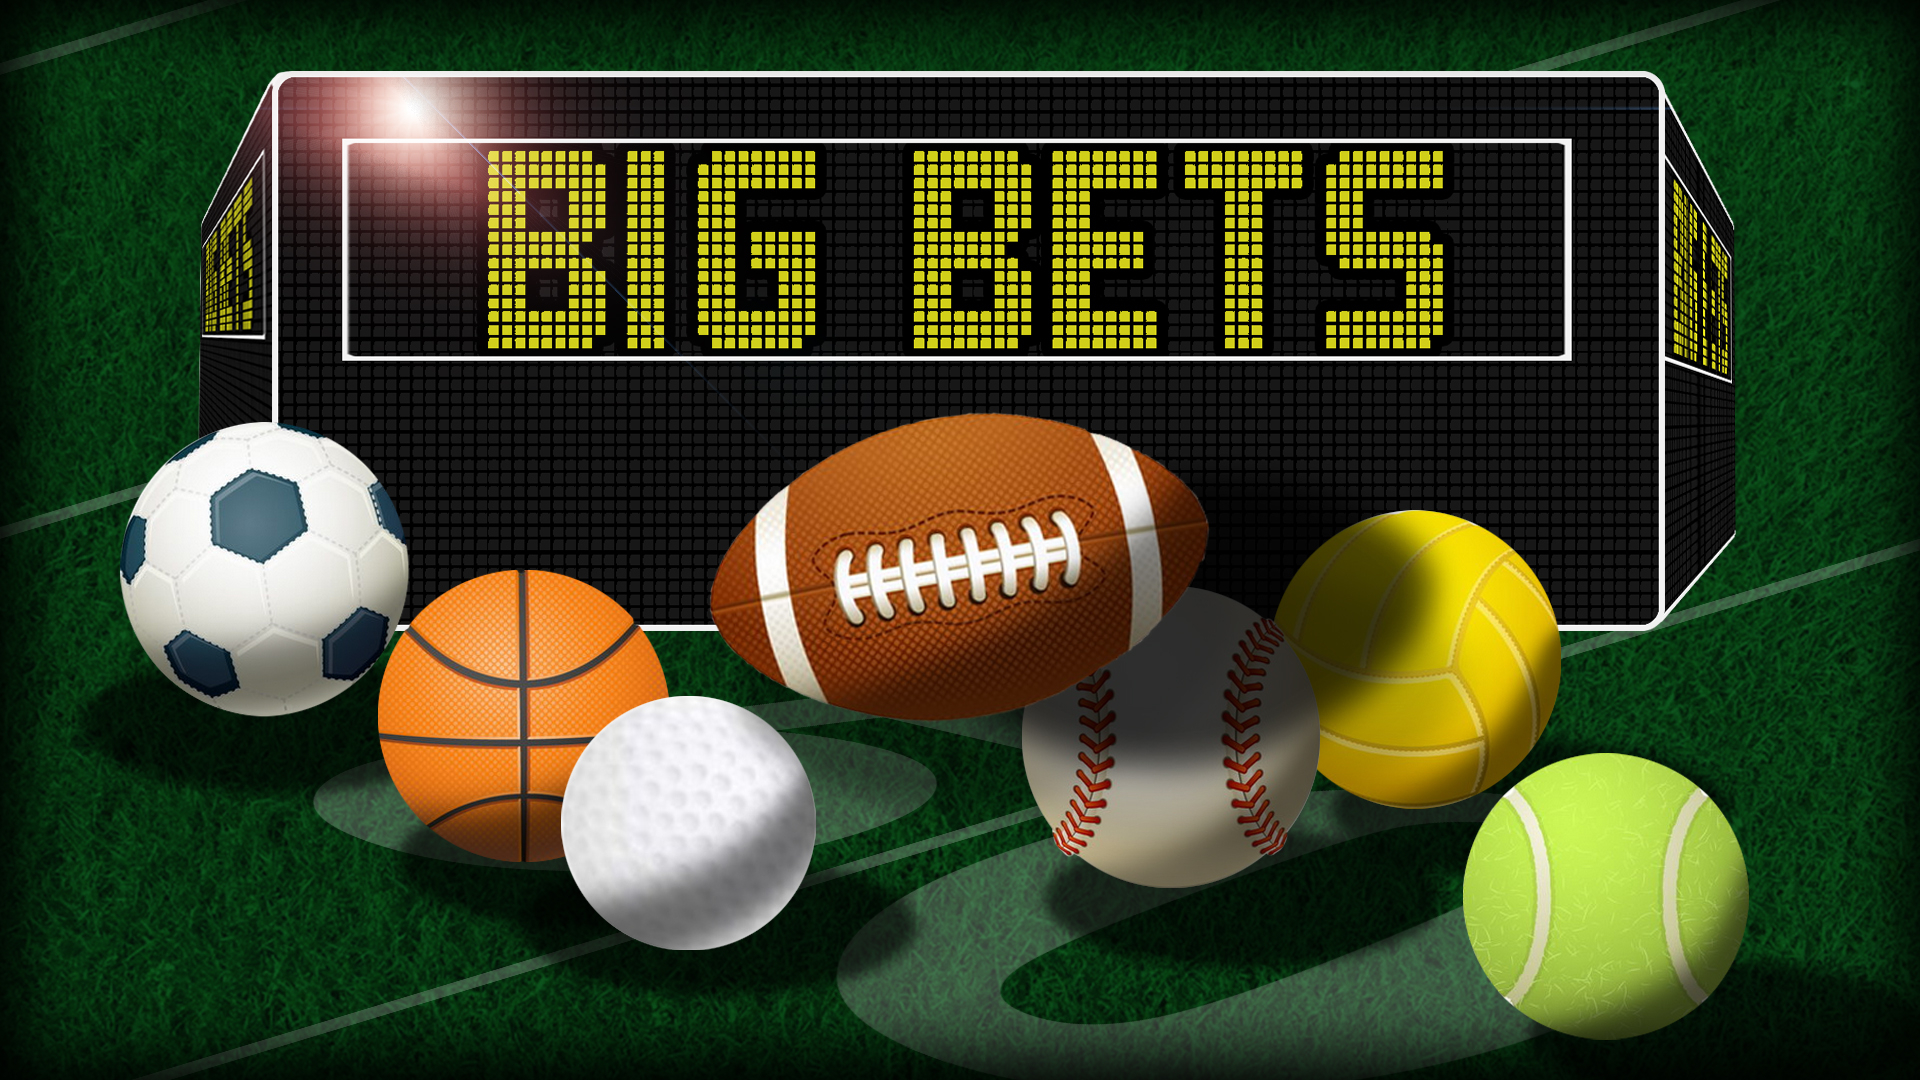 station casino sports betting app